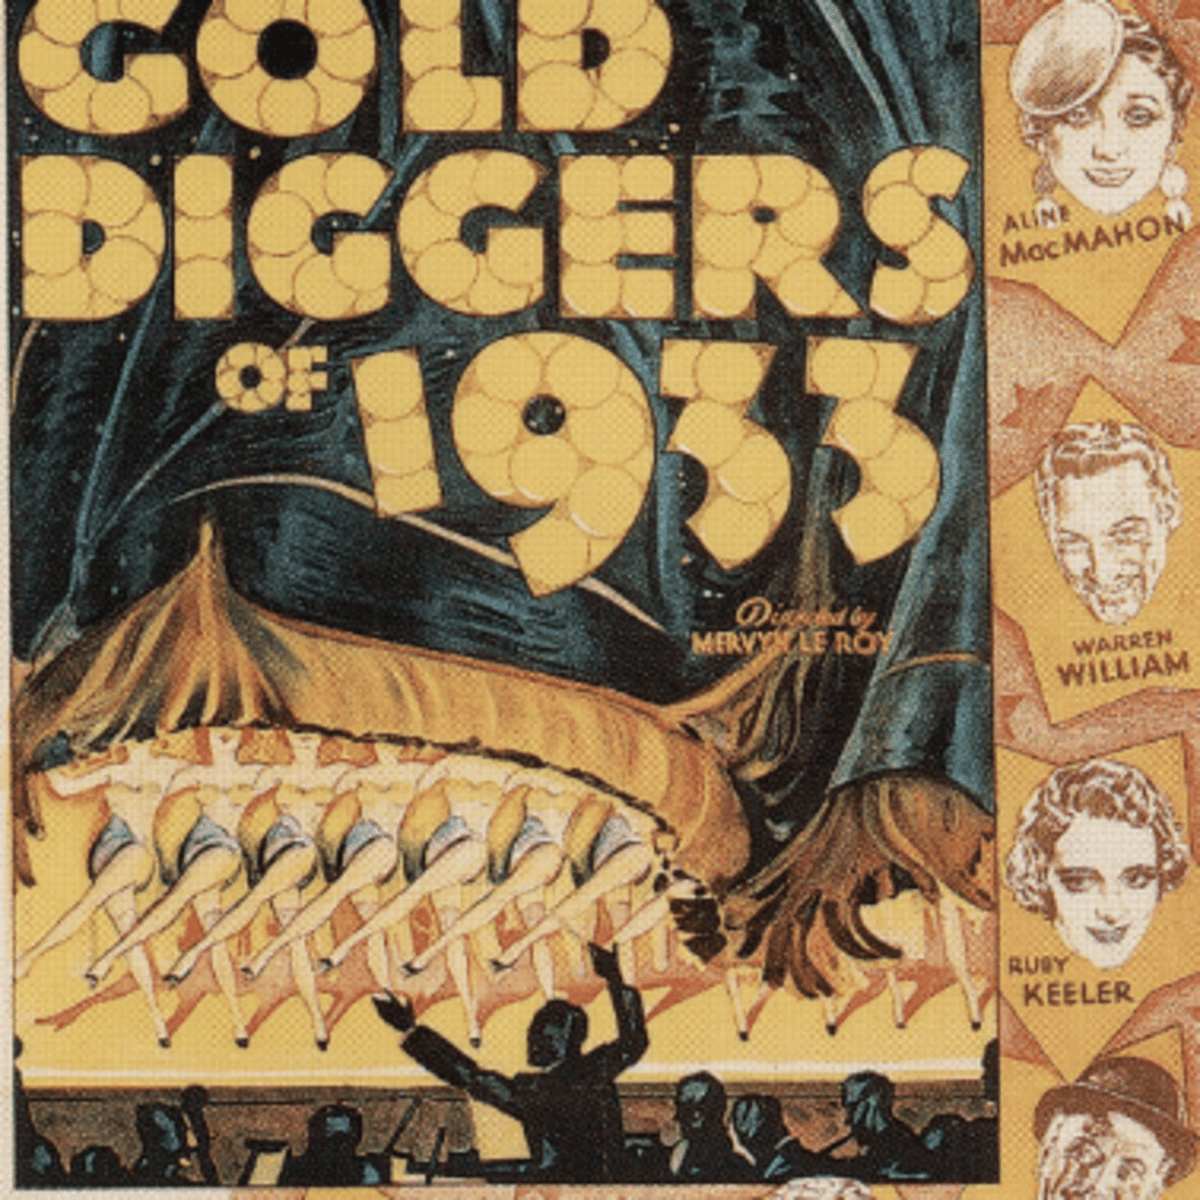  Gold Diggers of 1933 (1933) : Mervyn LeRoy, Warren